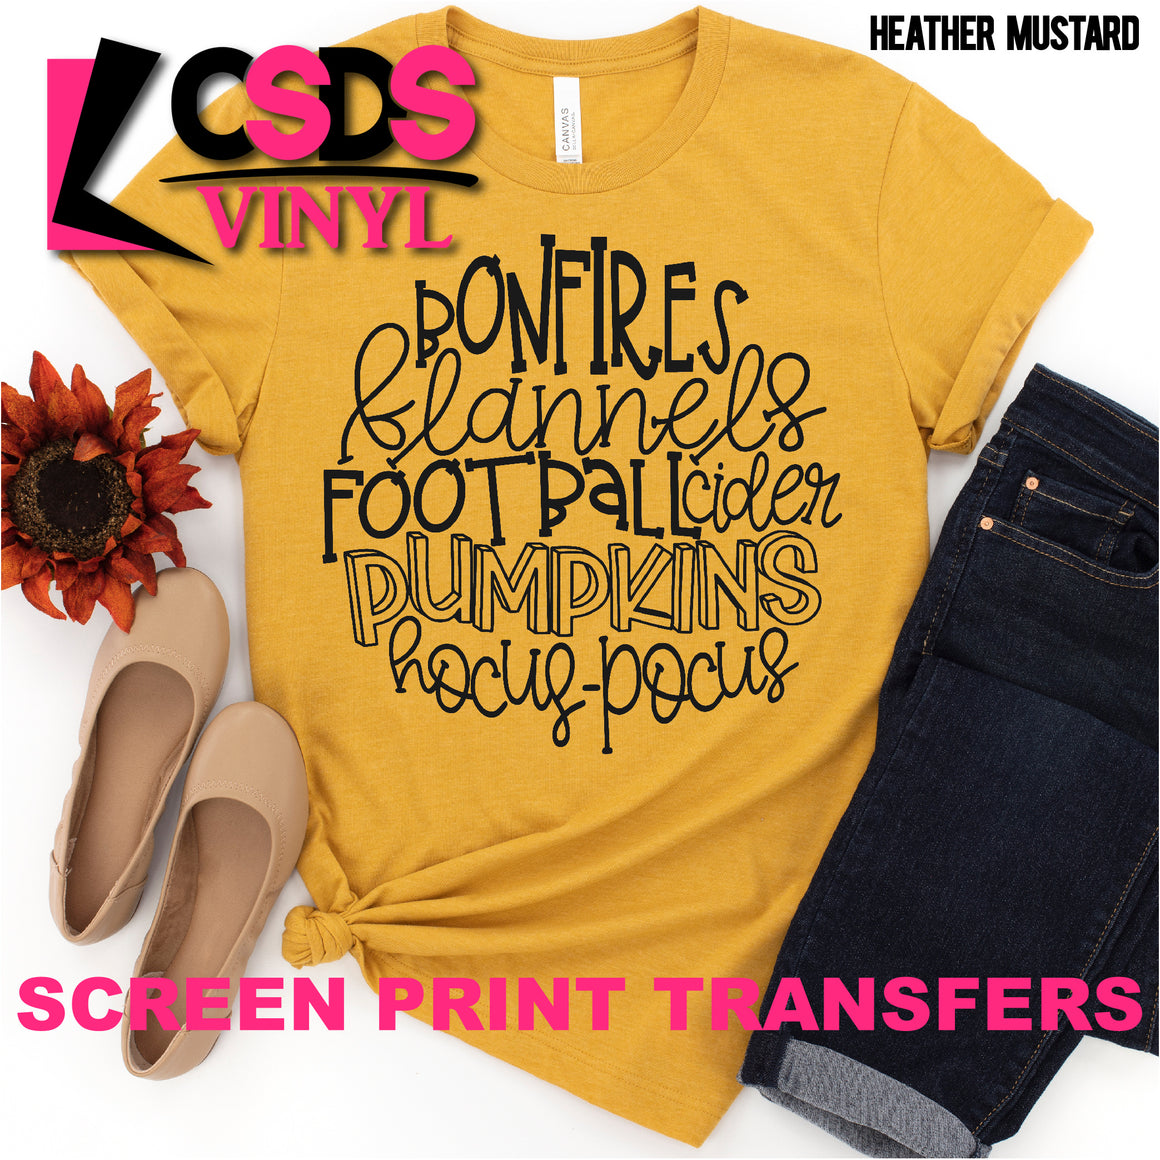 screen-print-transfers-page-3-csds-vinyl